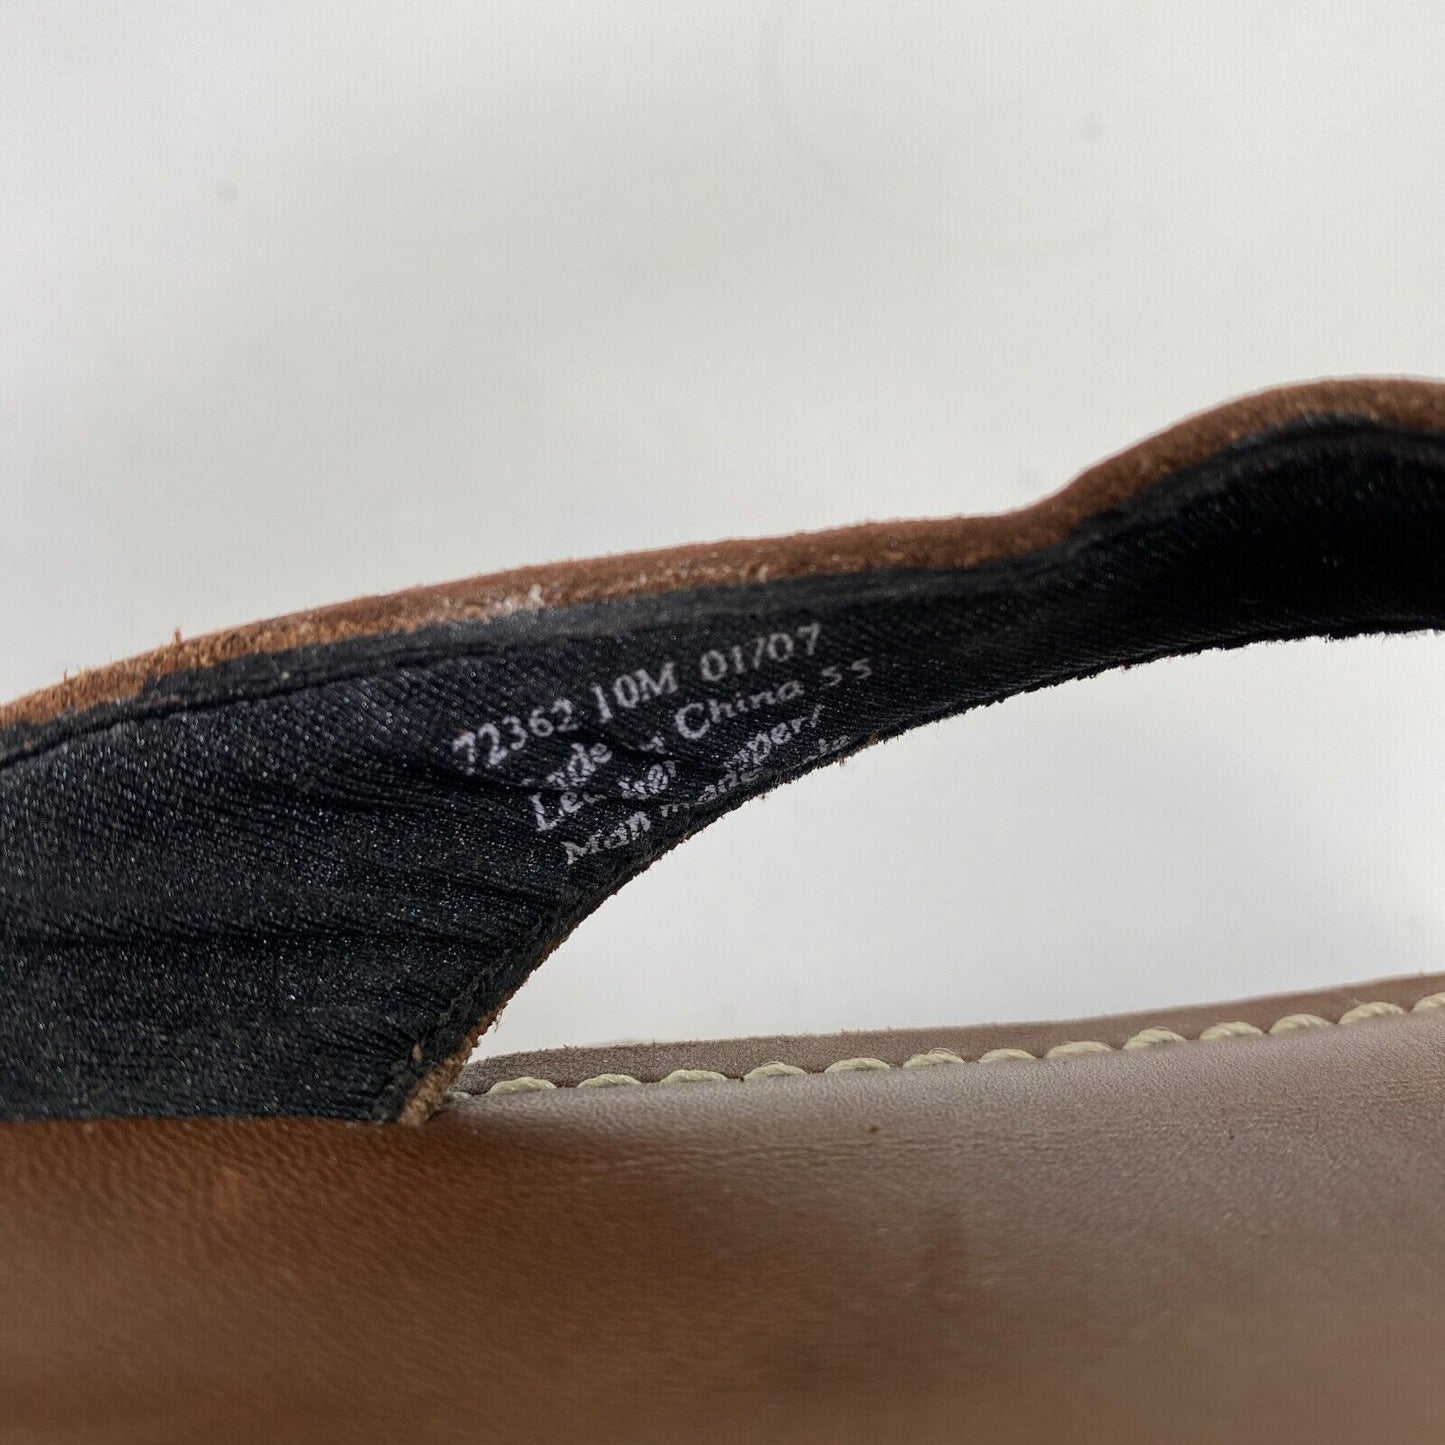 Clarks Women's Brown Leather Thong Flip Flops - 10